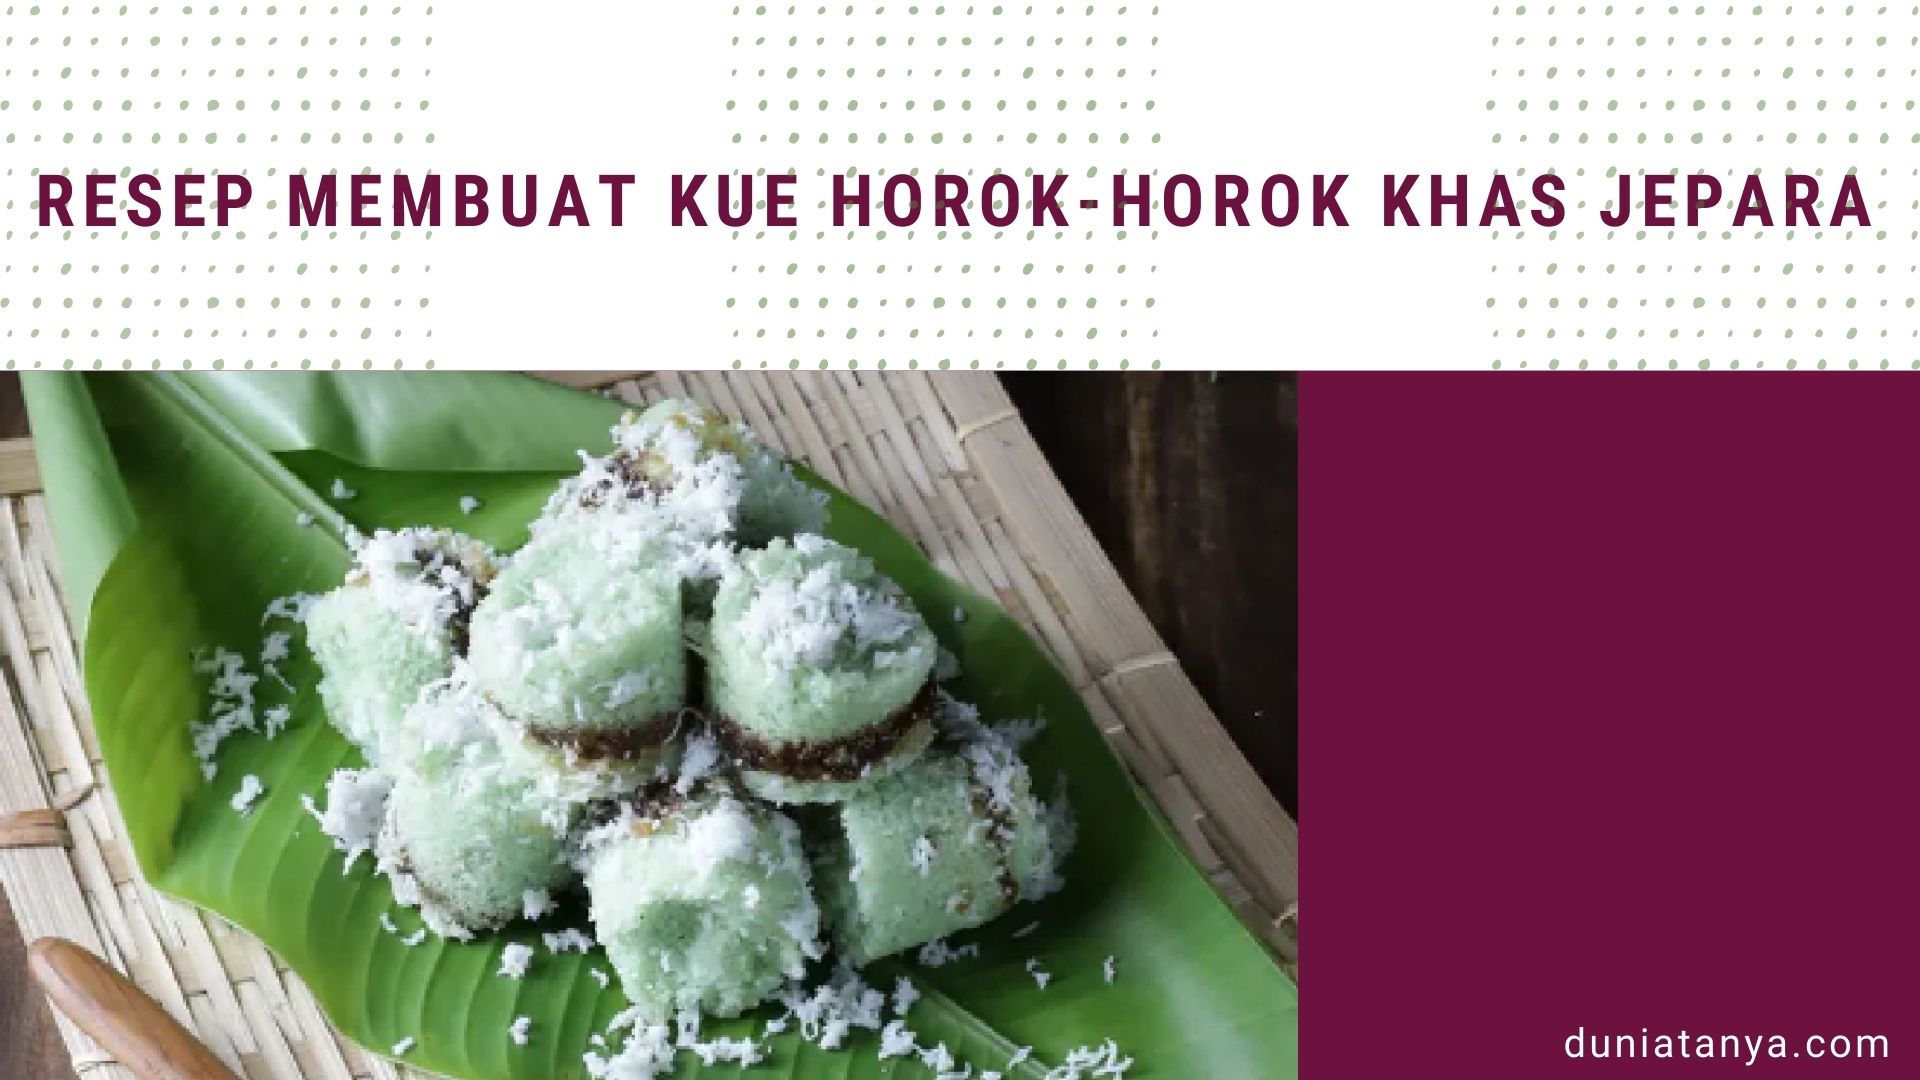 You are currently viewing Resep Membuat Kue Horok-Horok Khas Jepara,Jawa Tengah